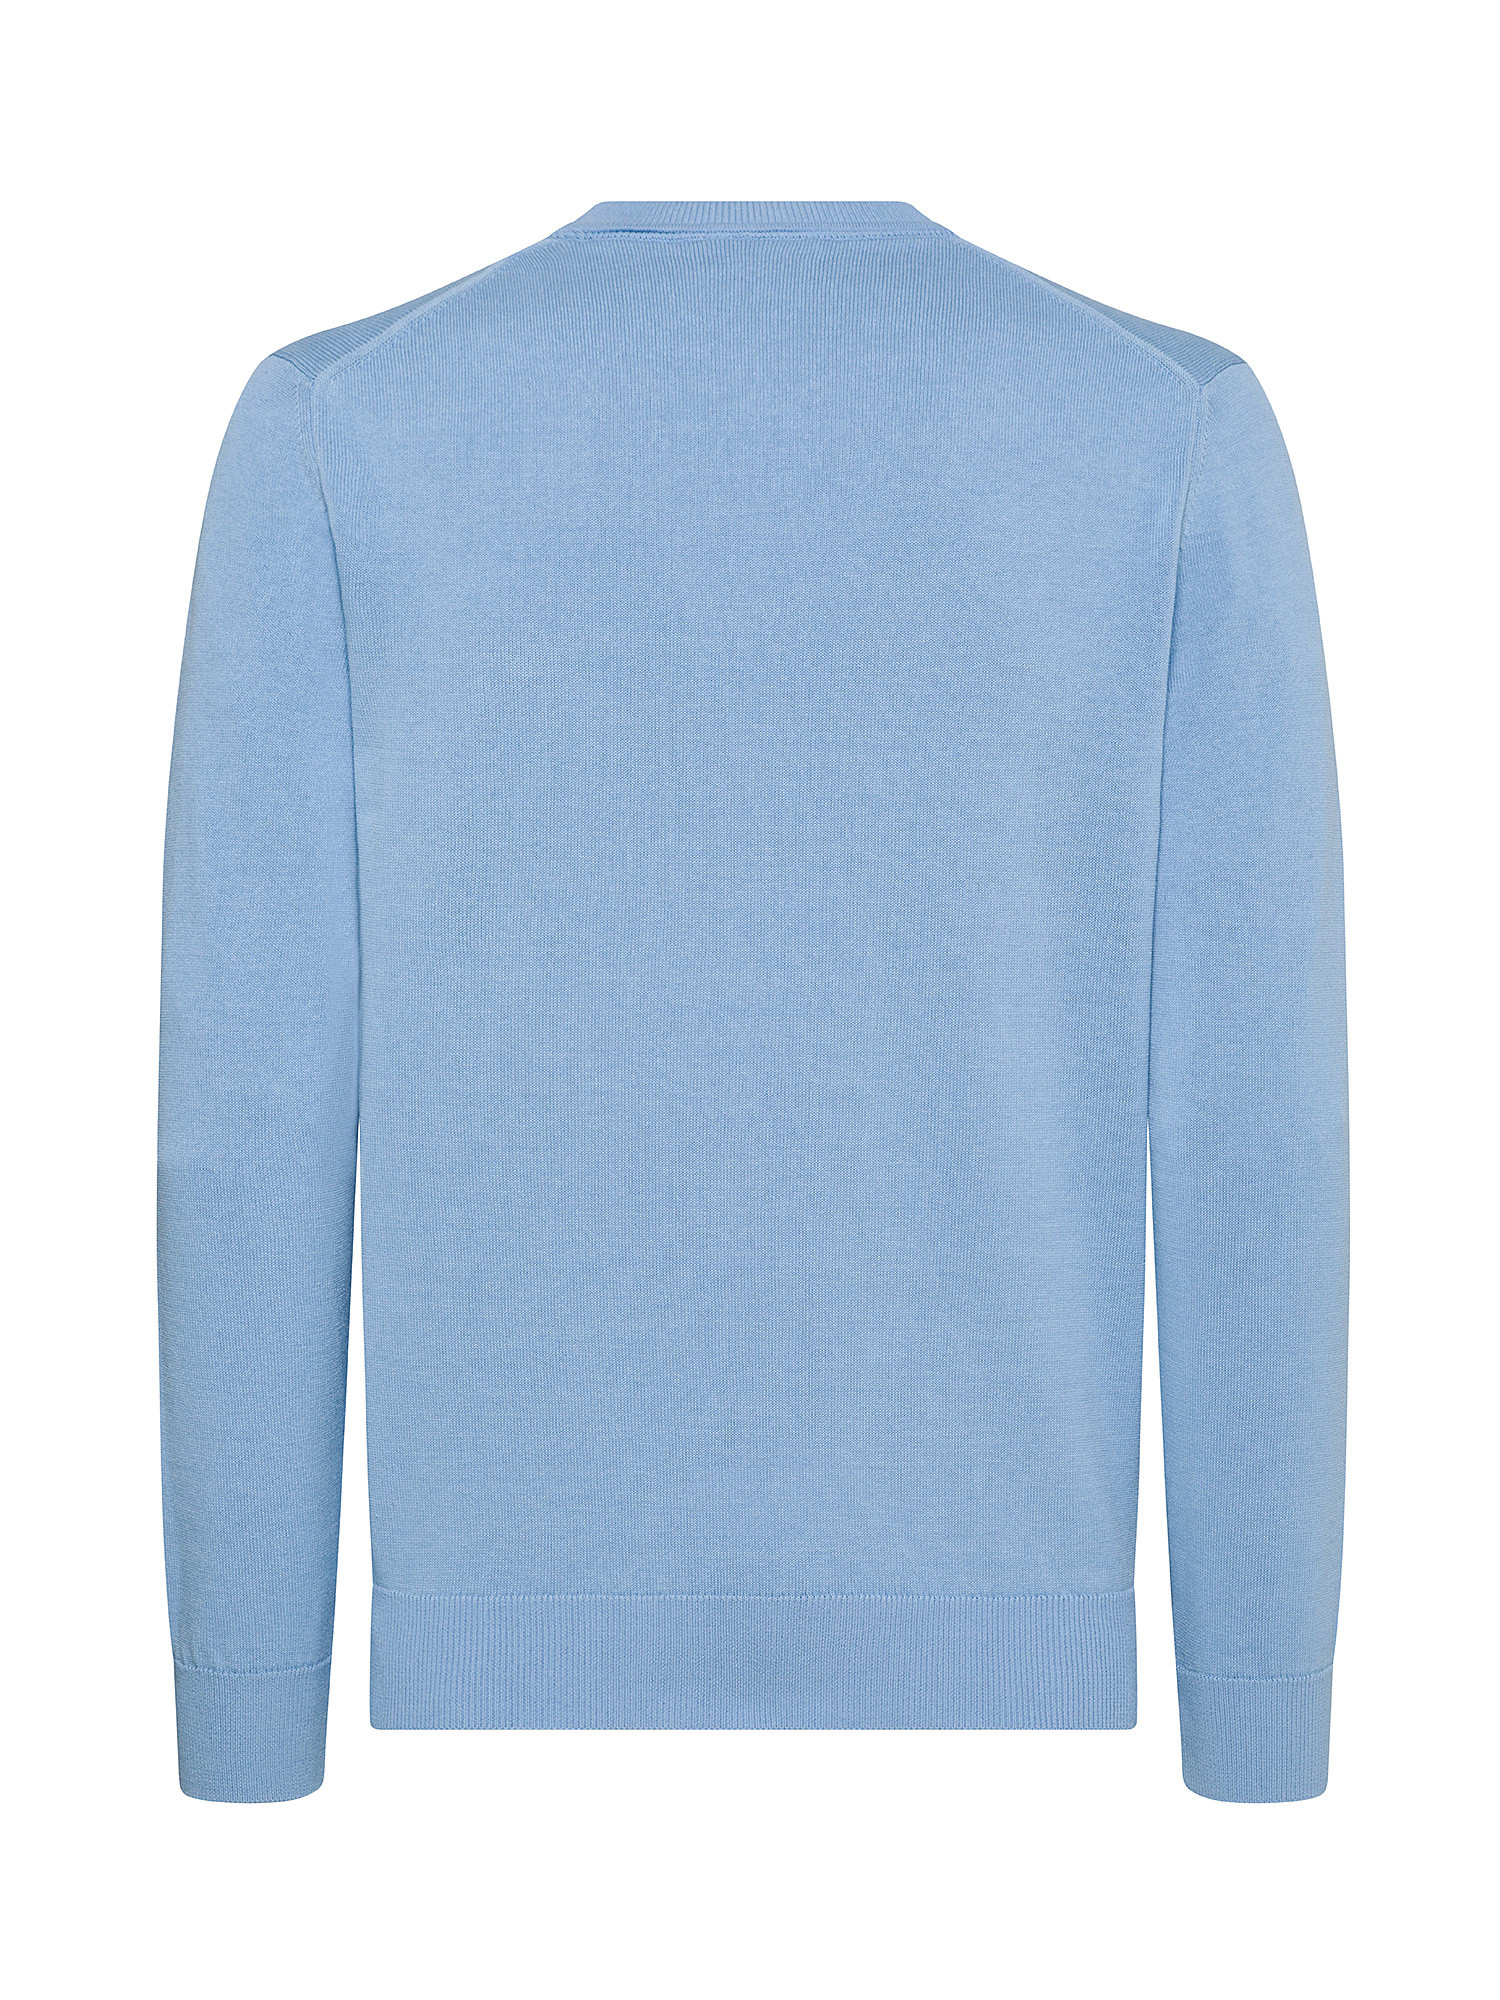 Lacoste - Cotton crewneck sweater, Light Blue, large image number 1